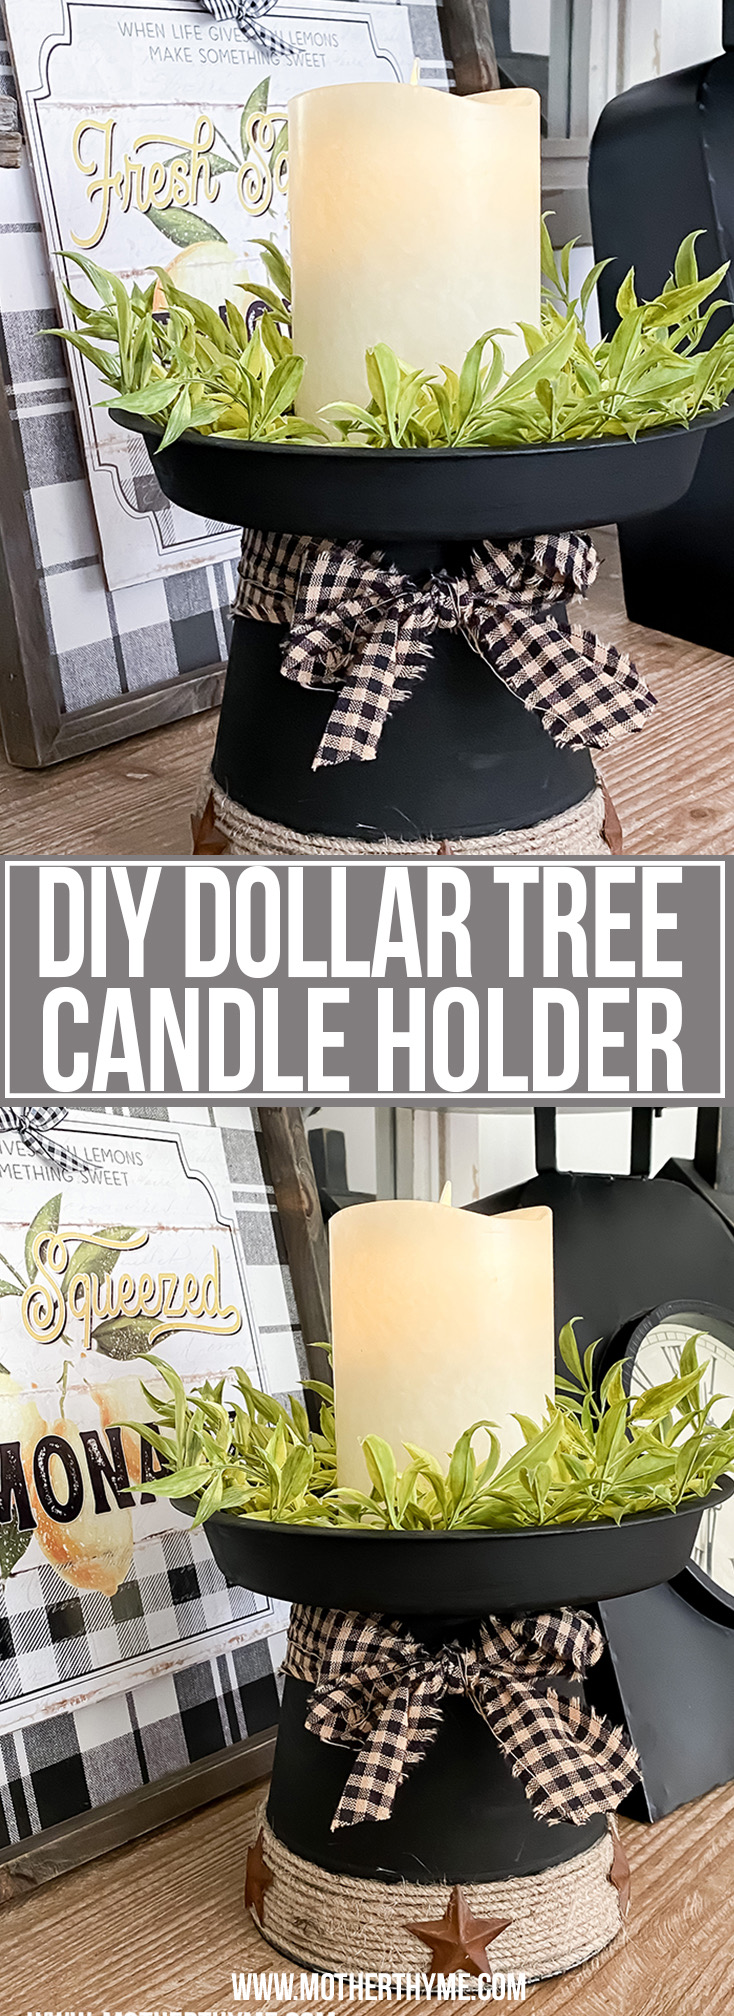 DIY DOLLAR TREE CANDLE HOLDER